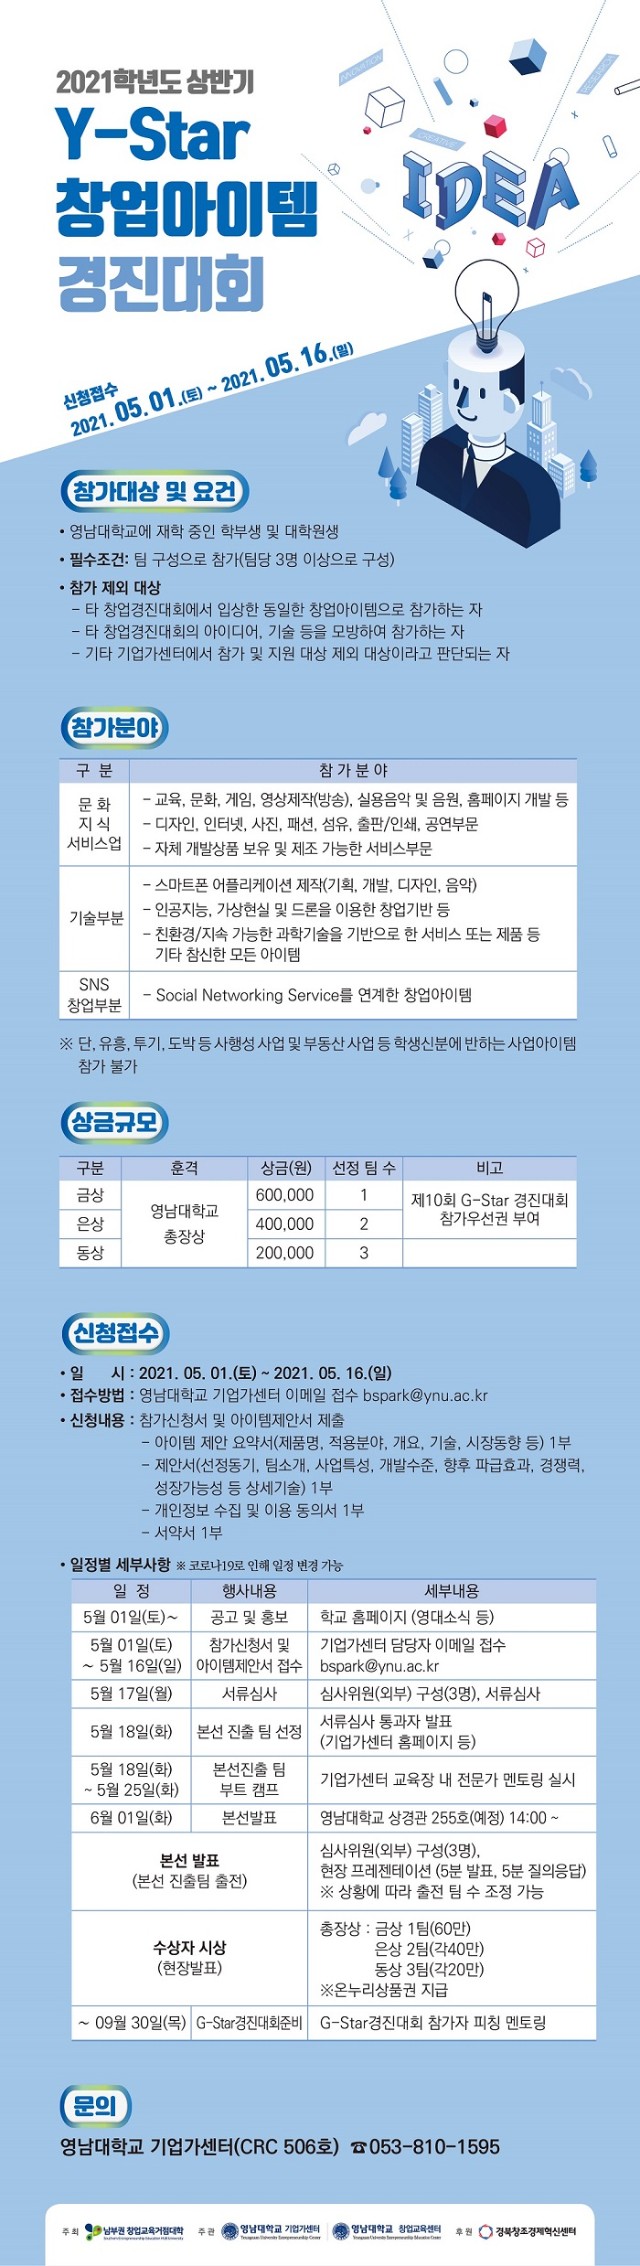 Y-Star창업아이템경진대회_웹용배너 - 복사본.jpg